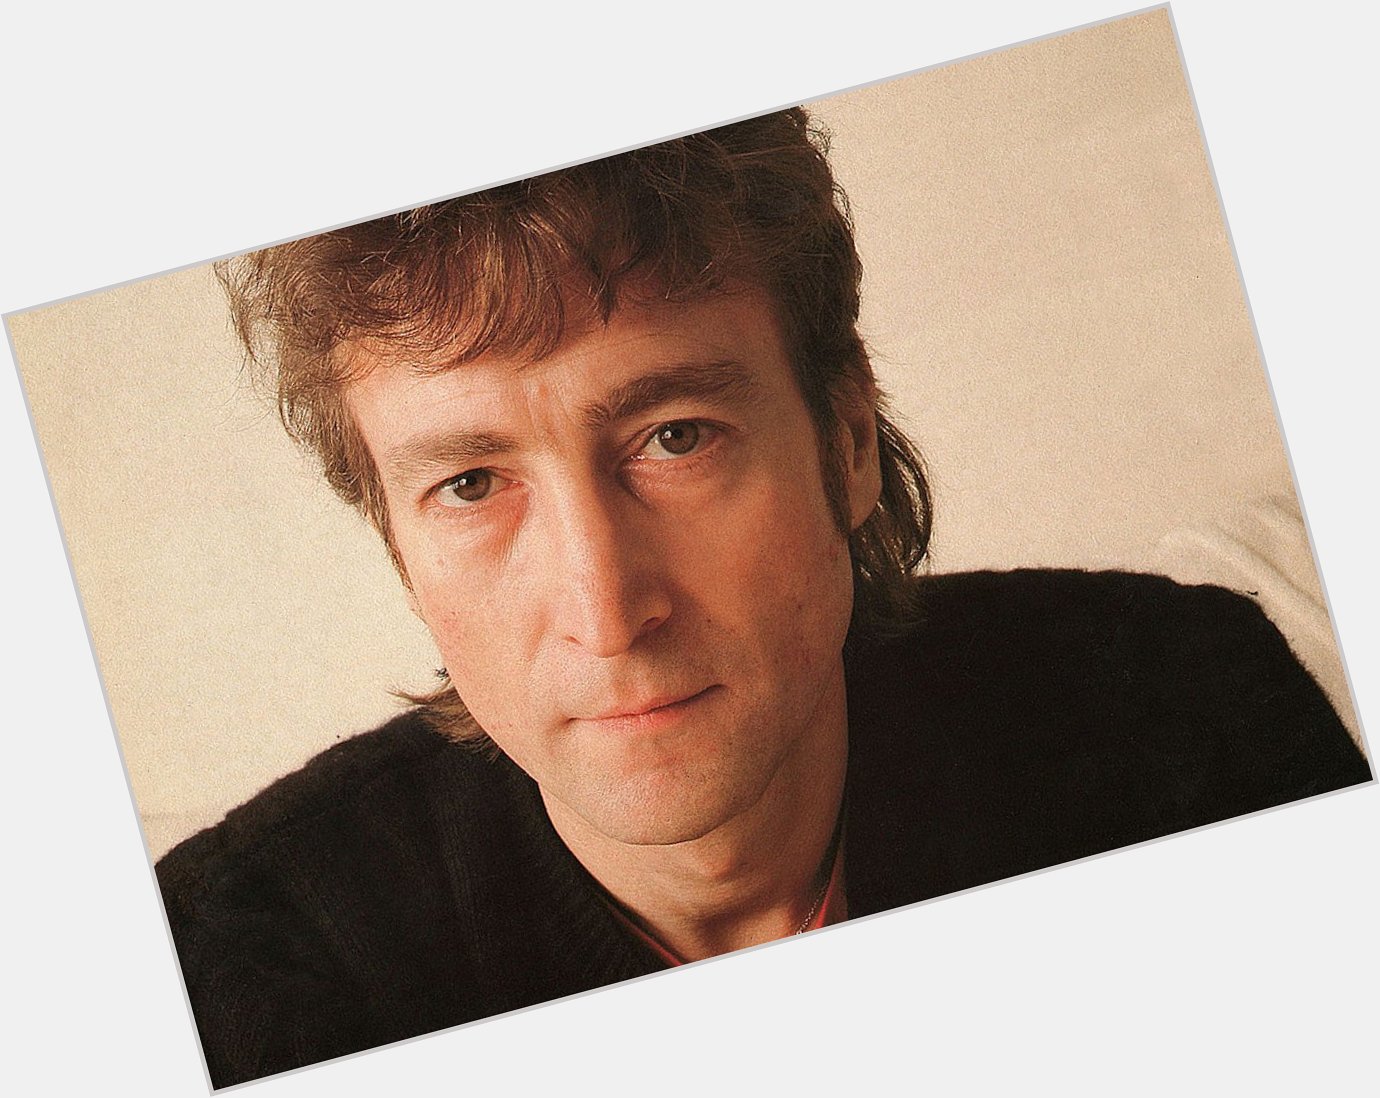 Happy 82nd birthday to John Lennon and happy 78th birthday to John Entwistle. 